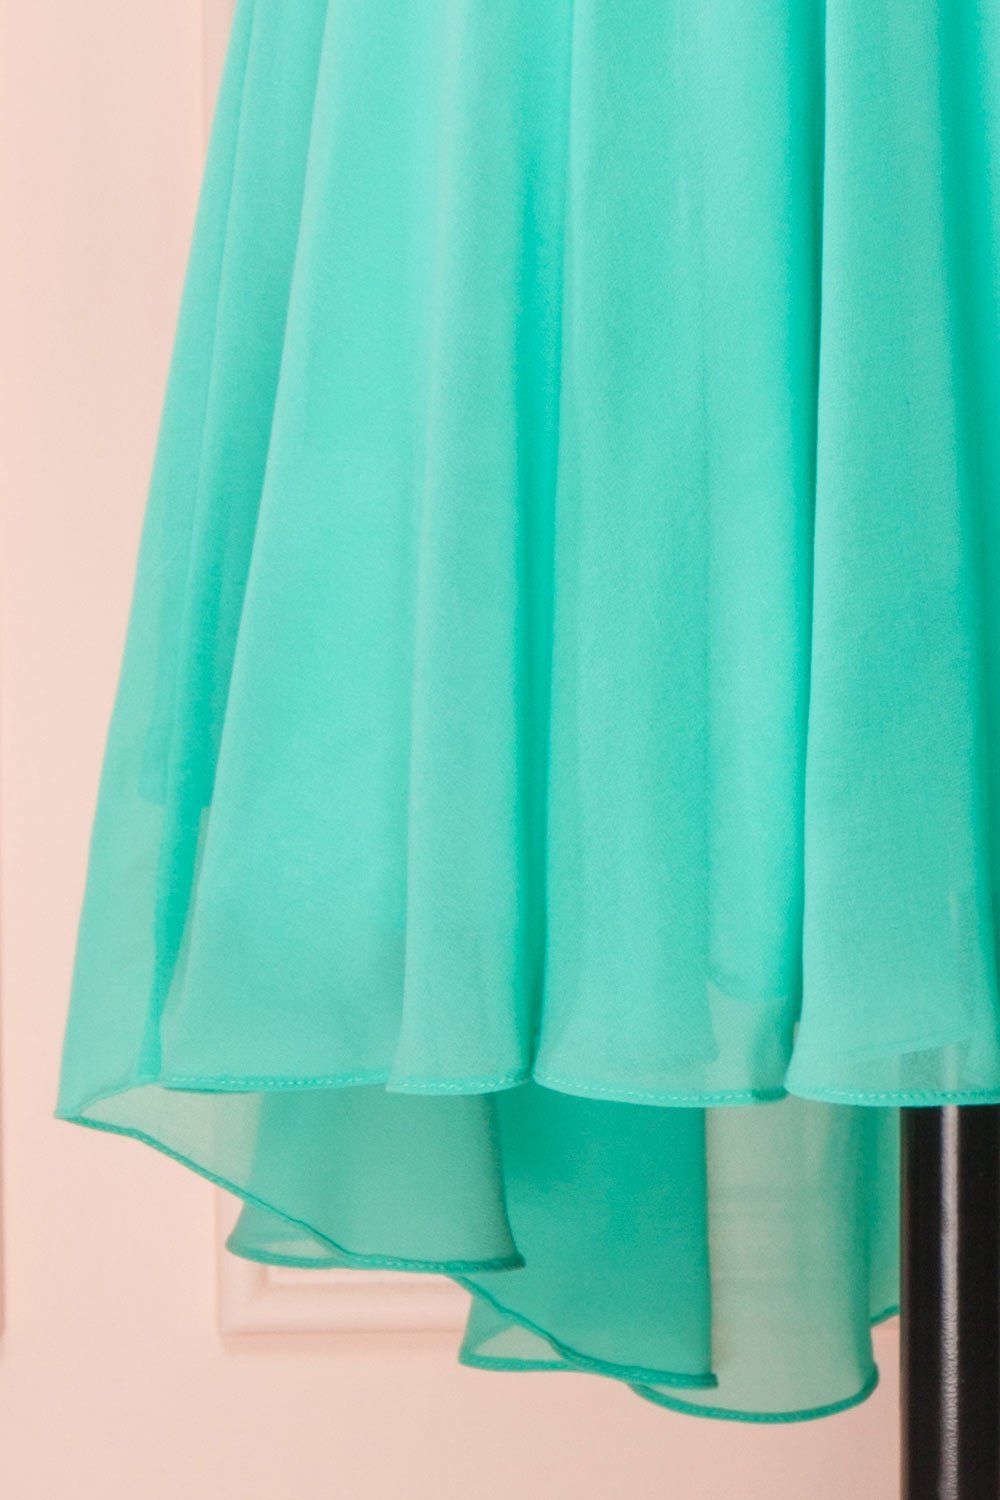 Maliha Mint Green Bustier A-Line Prom Dress | Boudoir 1861